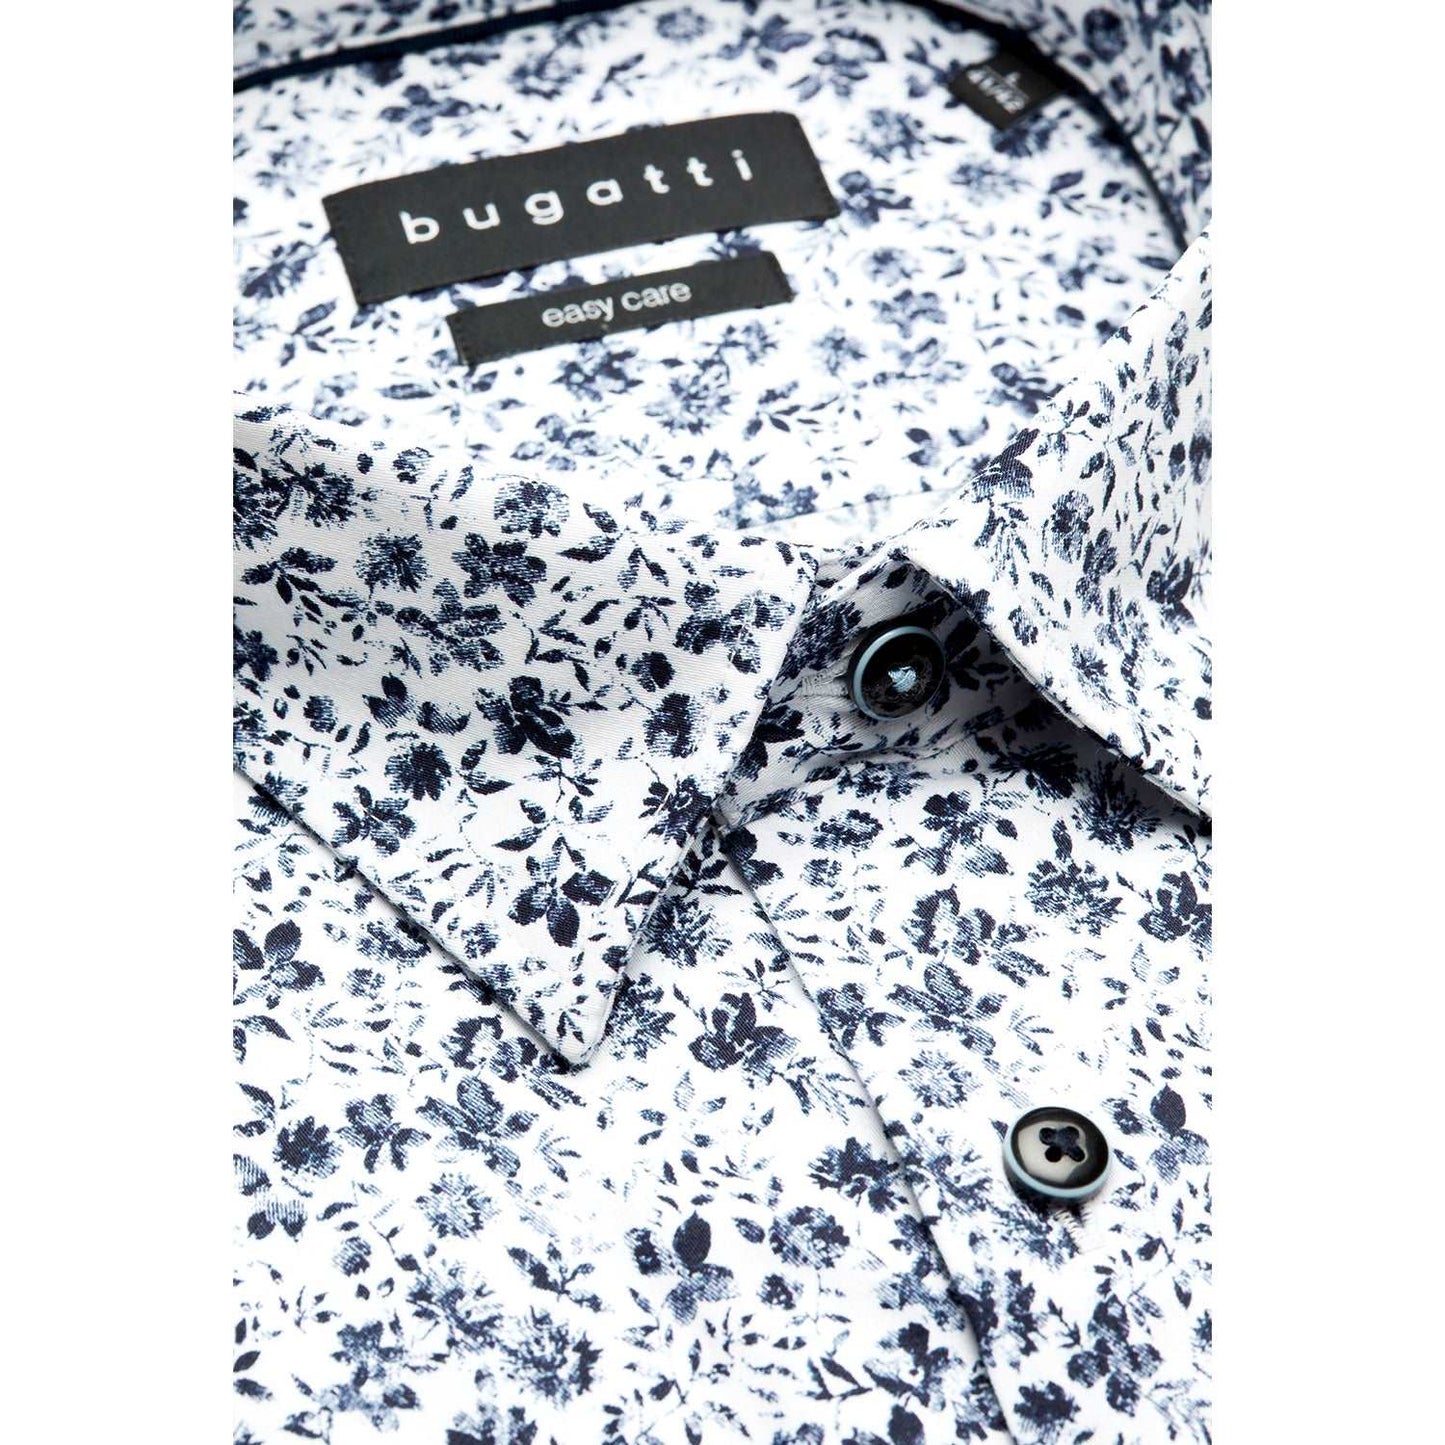 Bugatti Men's Casual Shirt Long Sleeve Floral Print